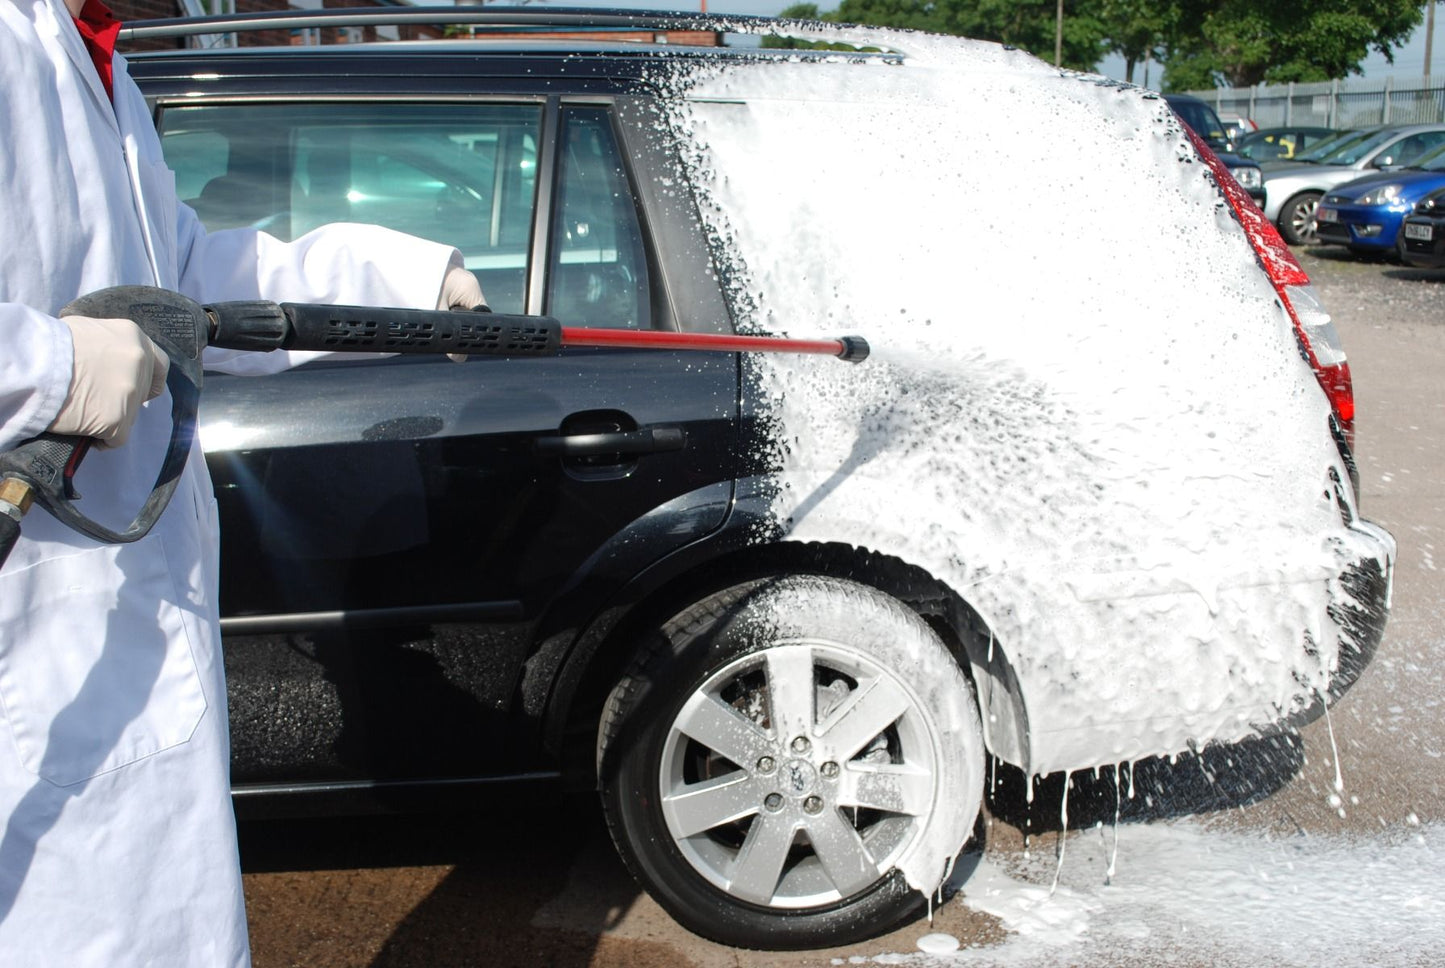 Foam Cleaner For Car -650ml